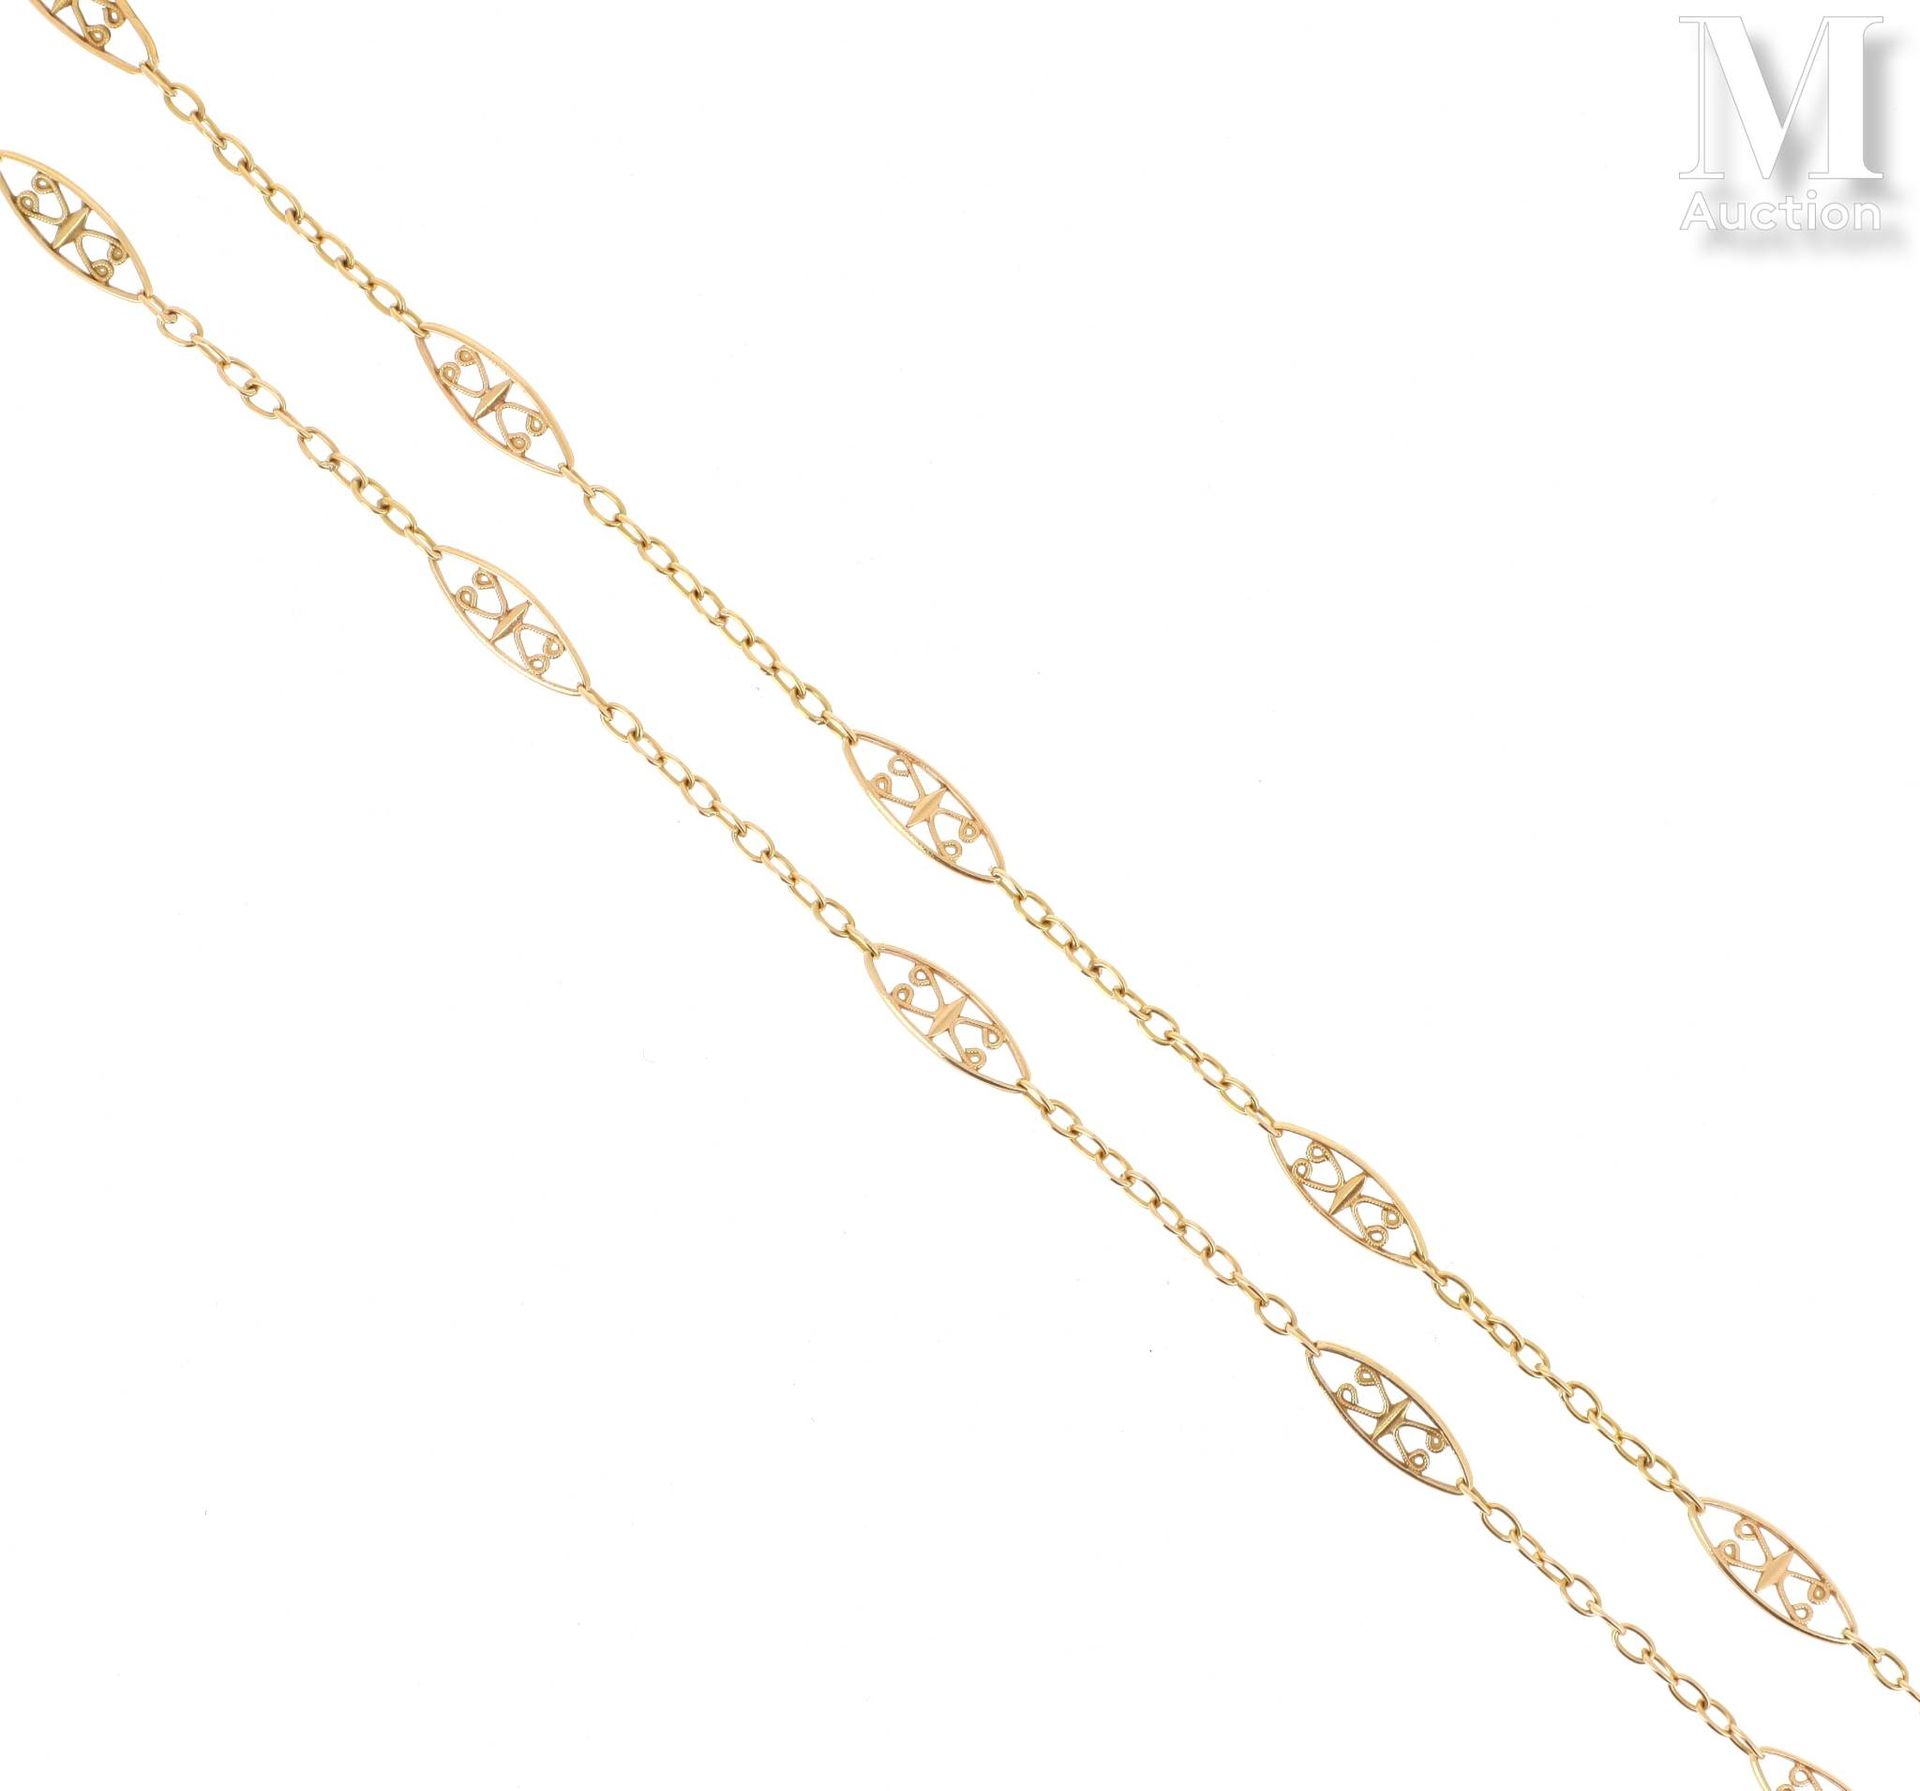 Sautoir maillons navettes 18K(750°/°)黄金长项链，镂空花丝链接。

毛重：14,4克。

长：74厘米